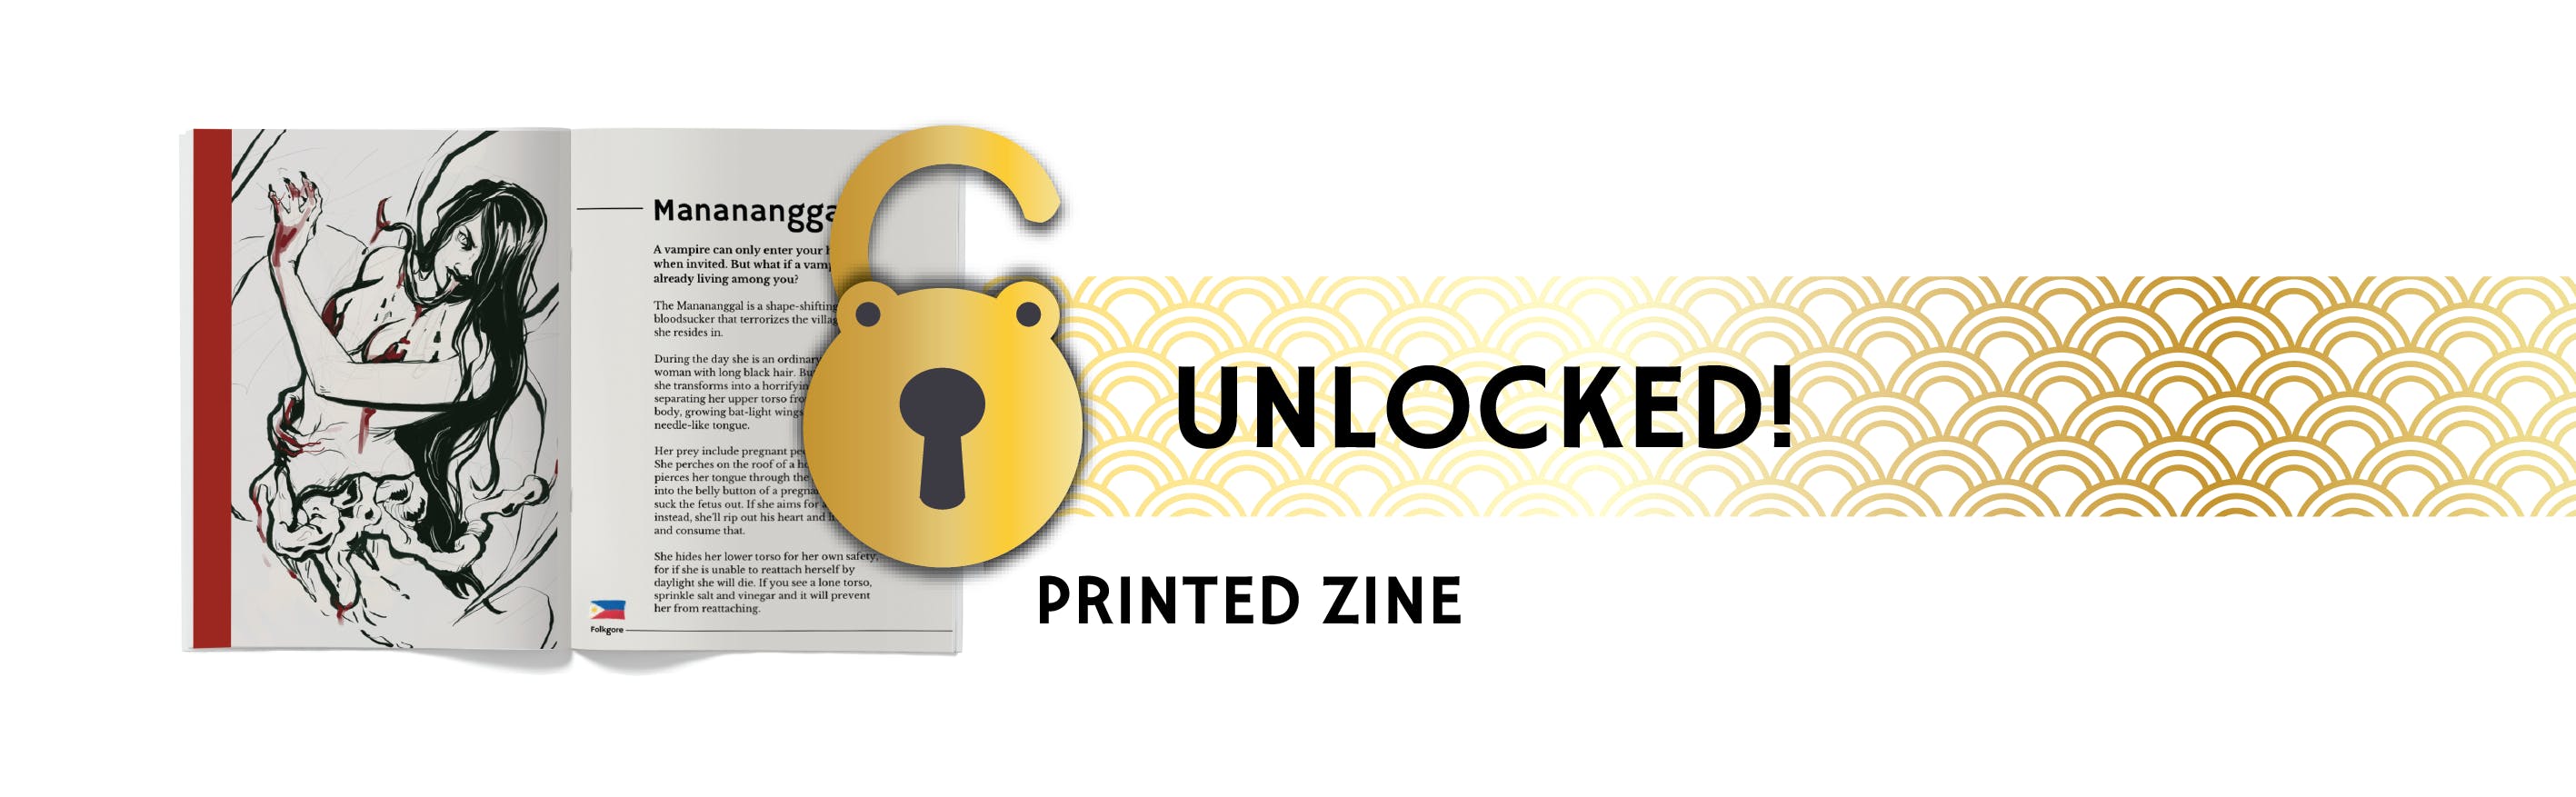 Stretch Goal #4: Unlock the Printed Zine